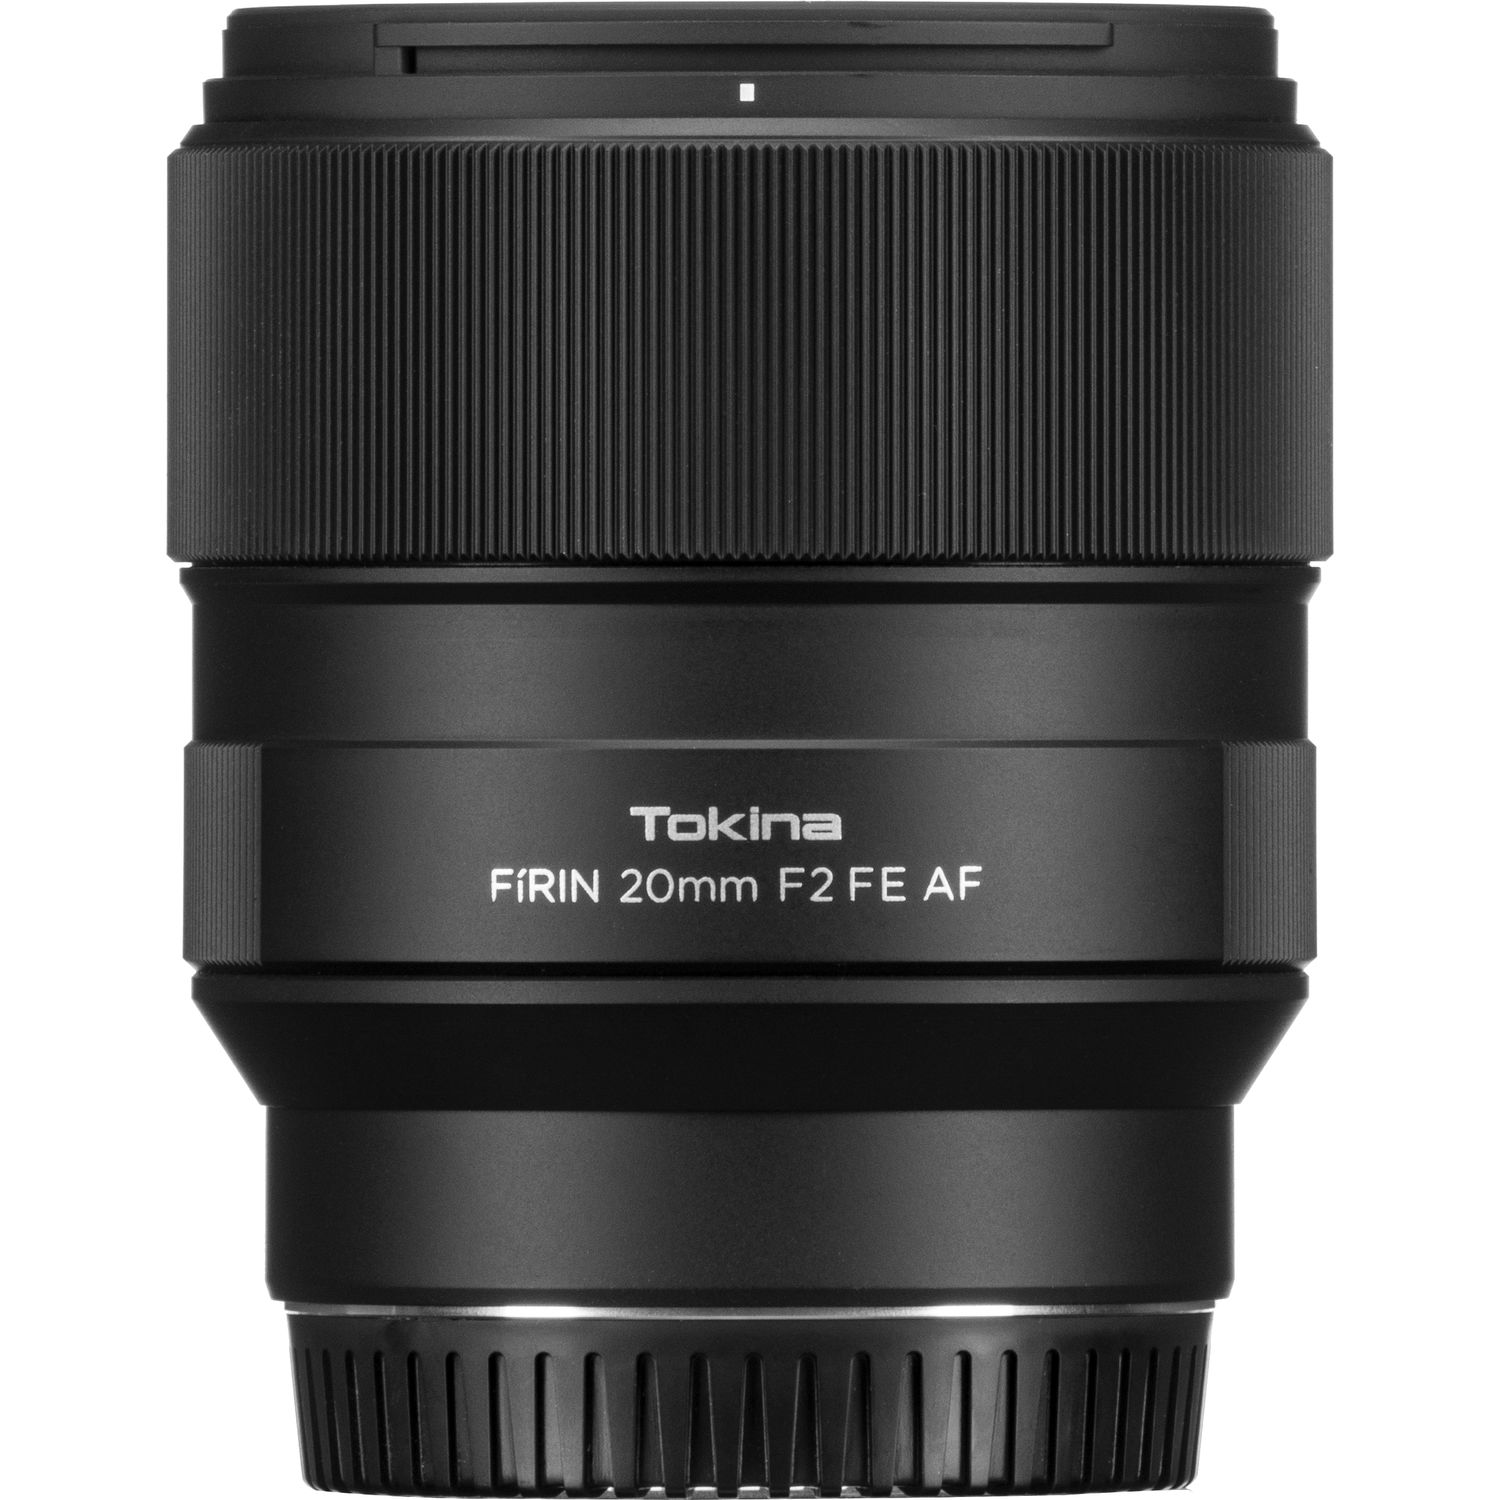 Tokina FiRIN 20mm F2.0 FE AF(SONY Eマウント) - カメラ